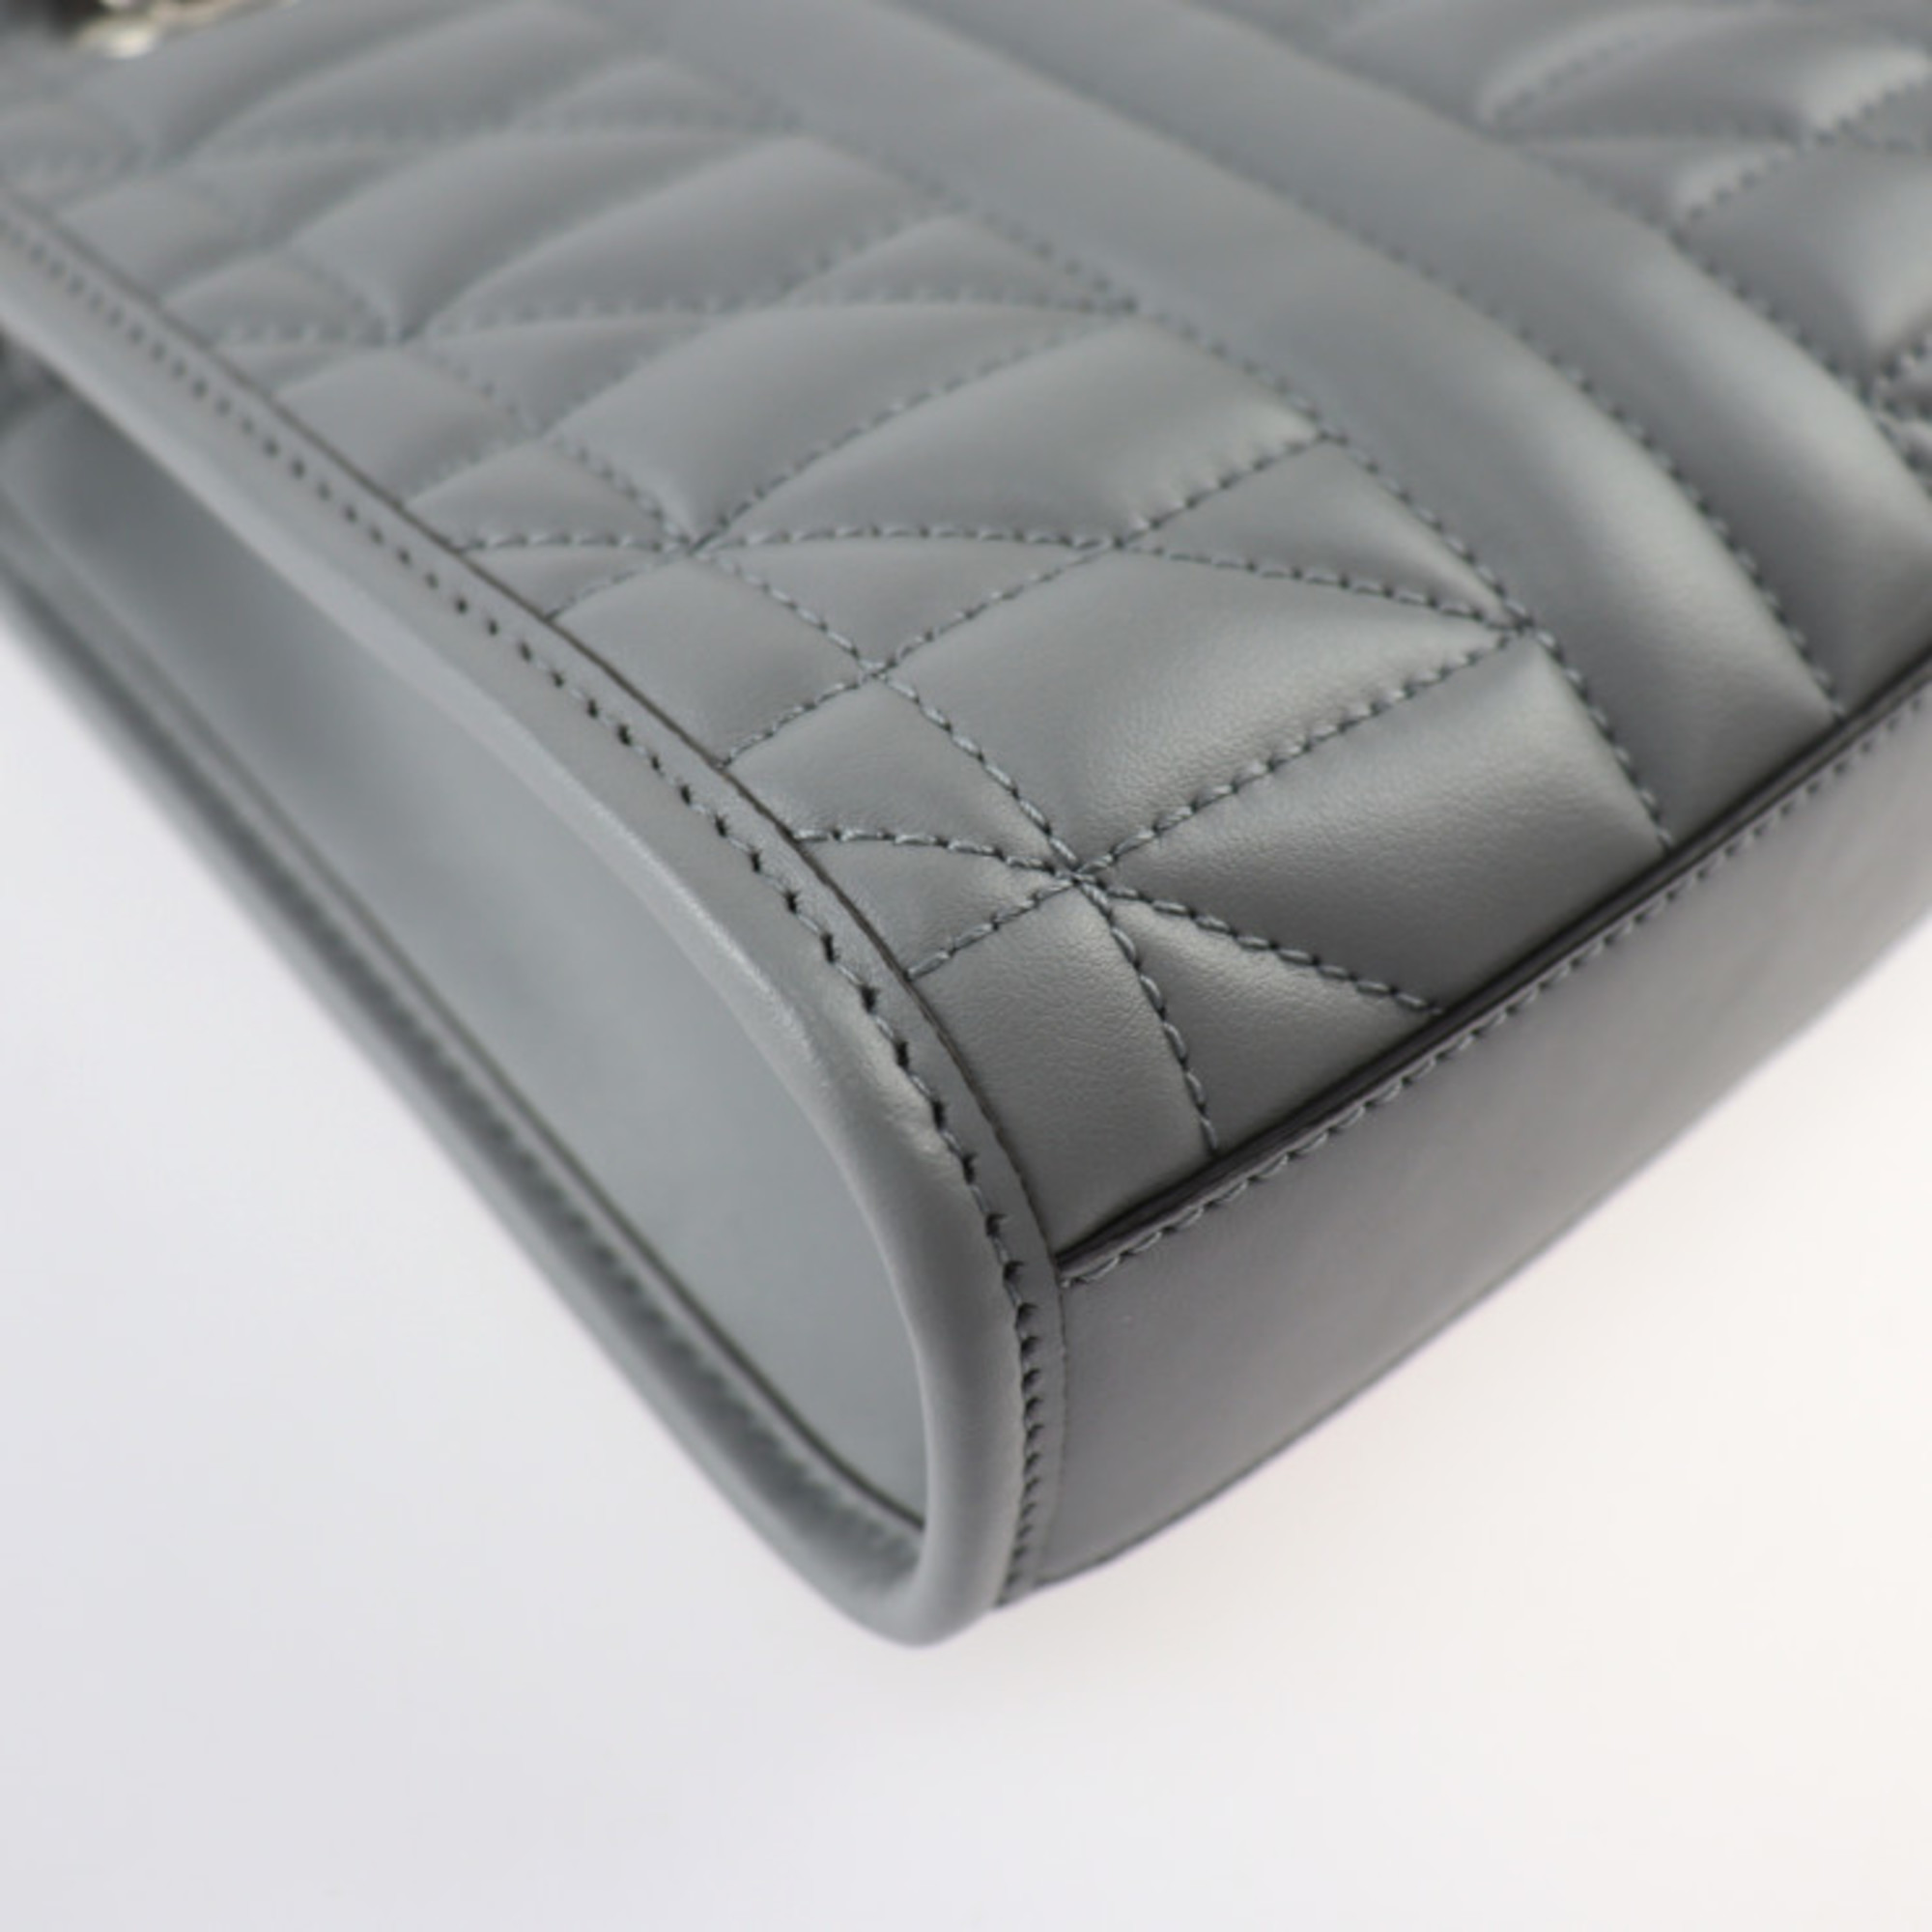 GUCCI GG Marmont Handbag 696123 Leather Gray Silver Hardware 2WAY Shoulder Bag Quilting